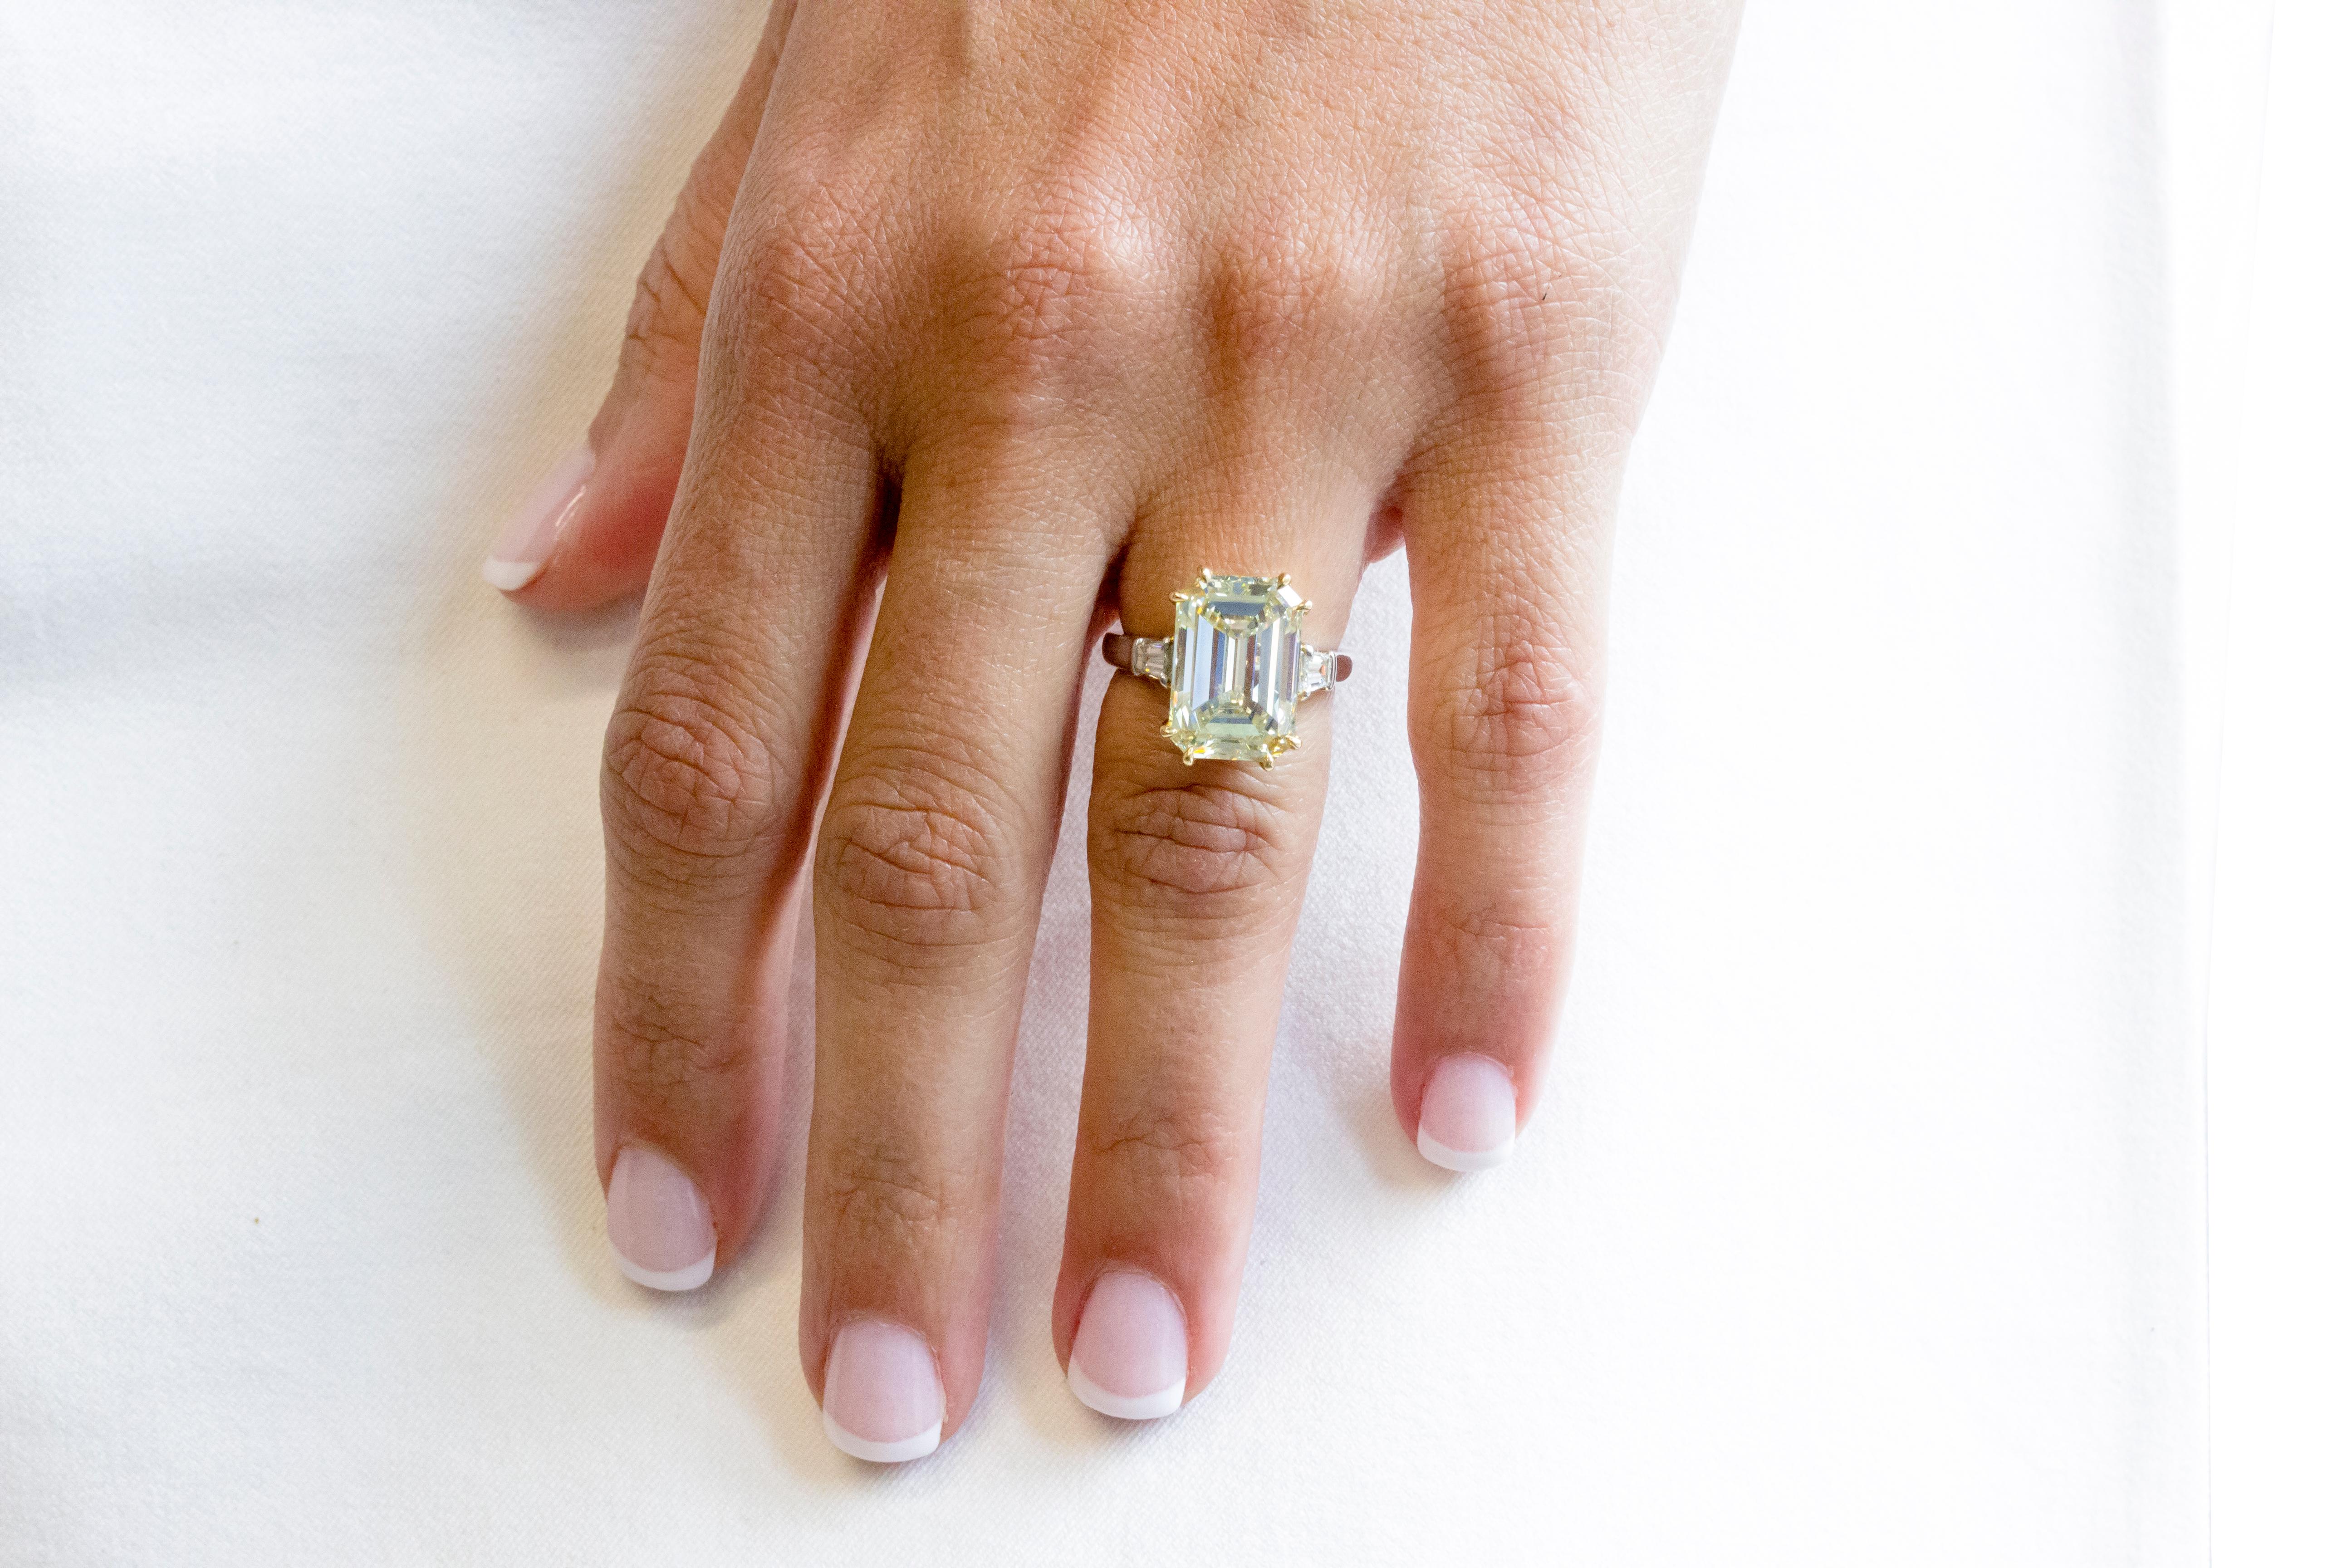 yellow emerald cut diamond ring